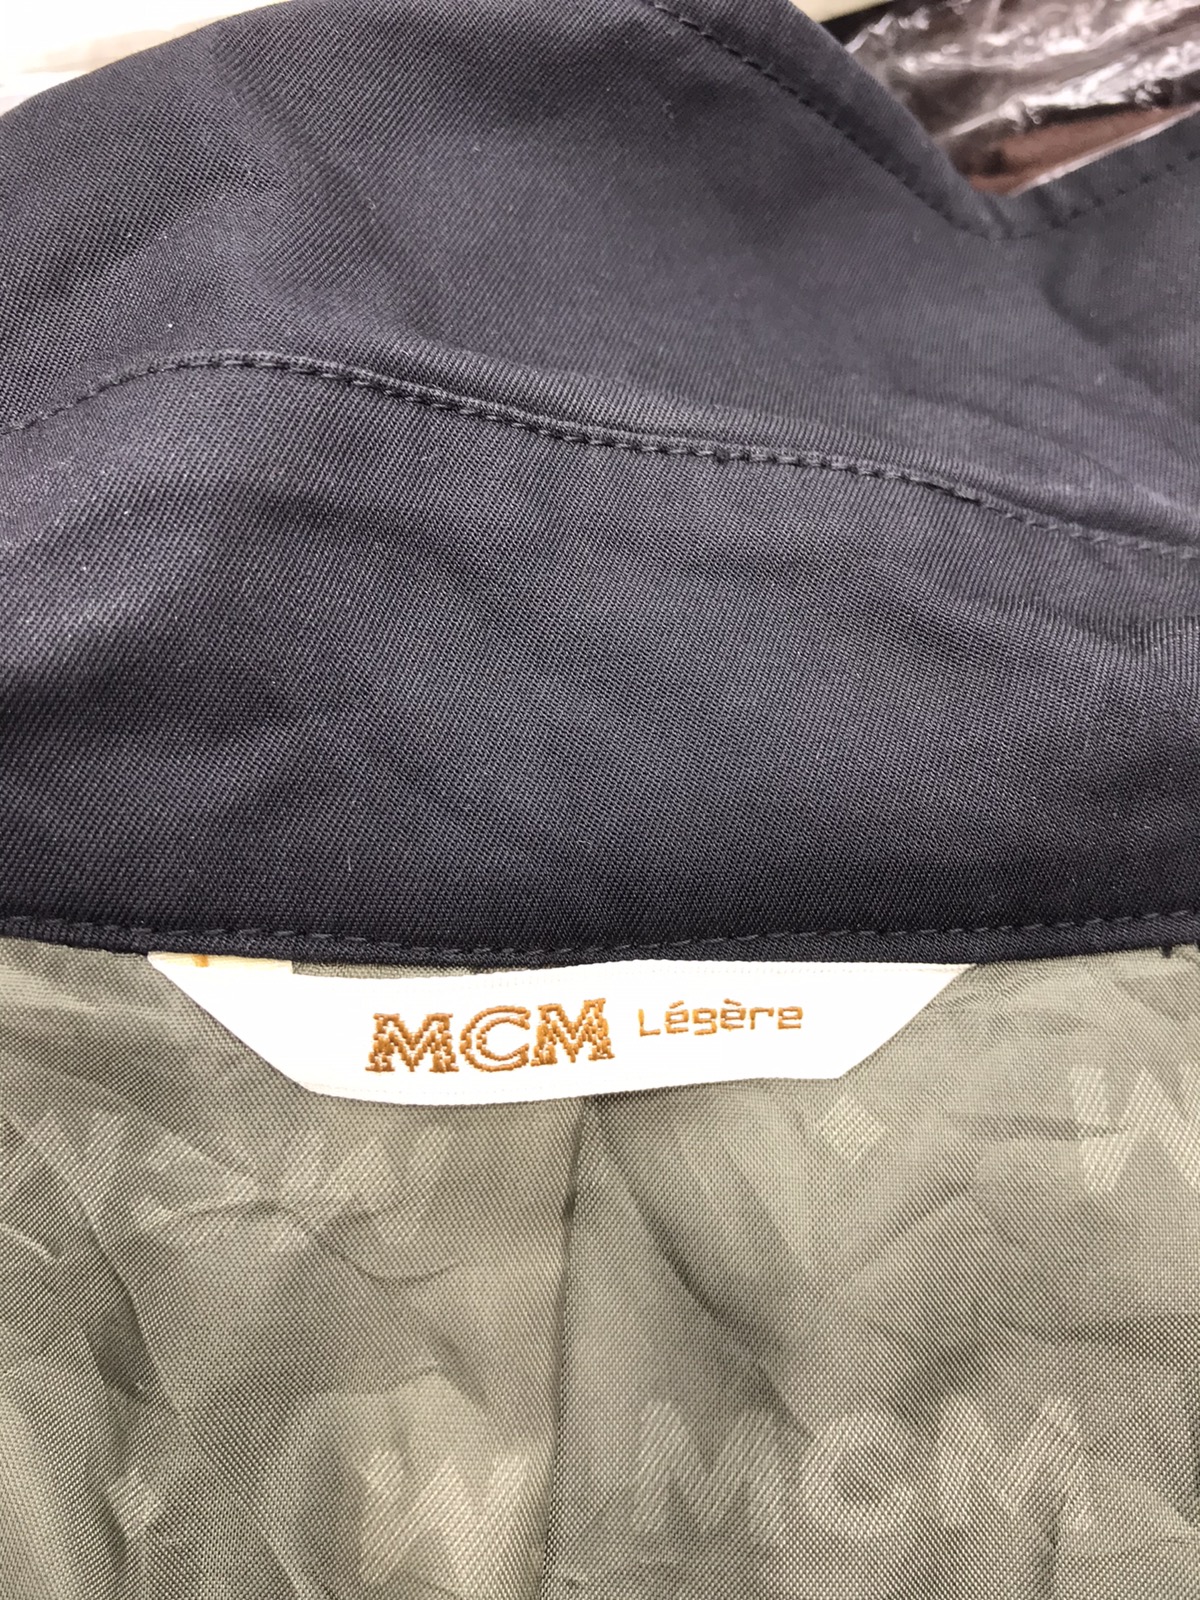 Mcm Vintage Jacket (P22) - 7